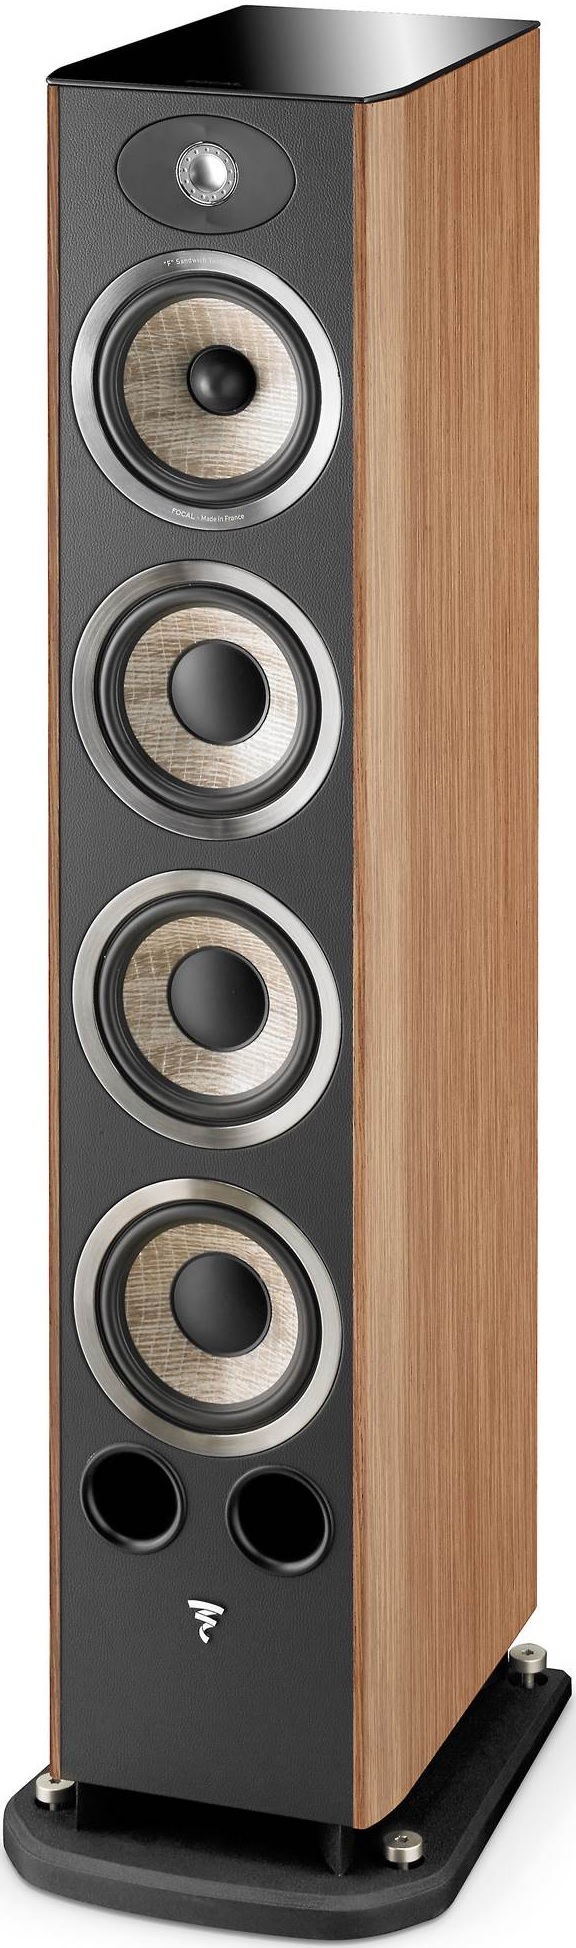 focal-aria-936-3-way-floorstanding-speaker-prime-walnut-each